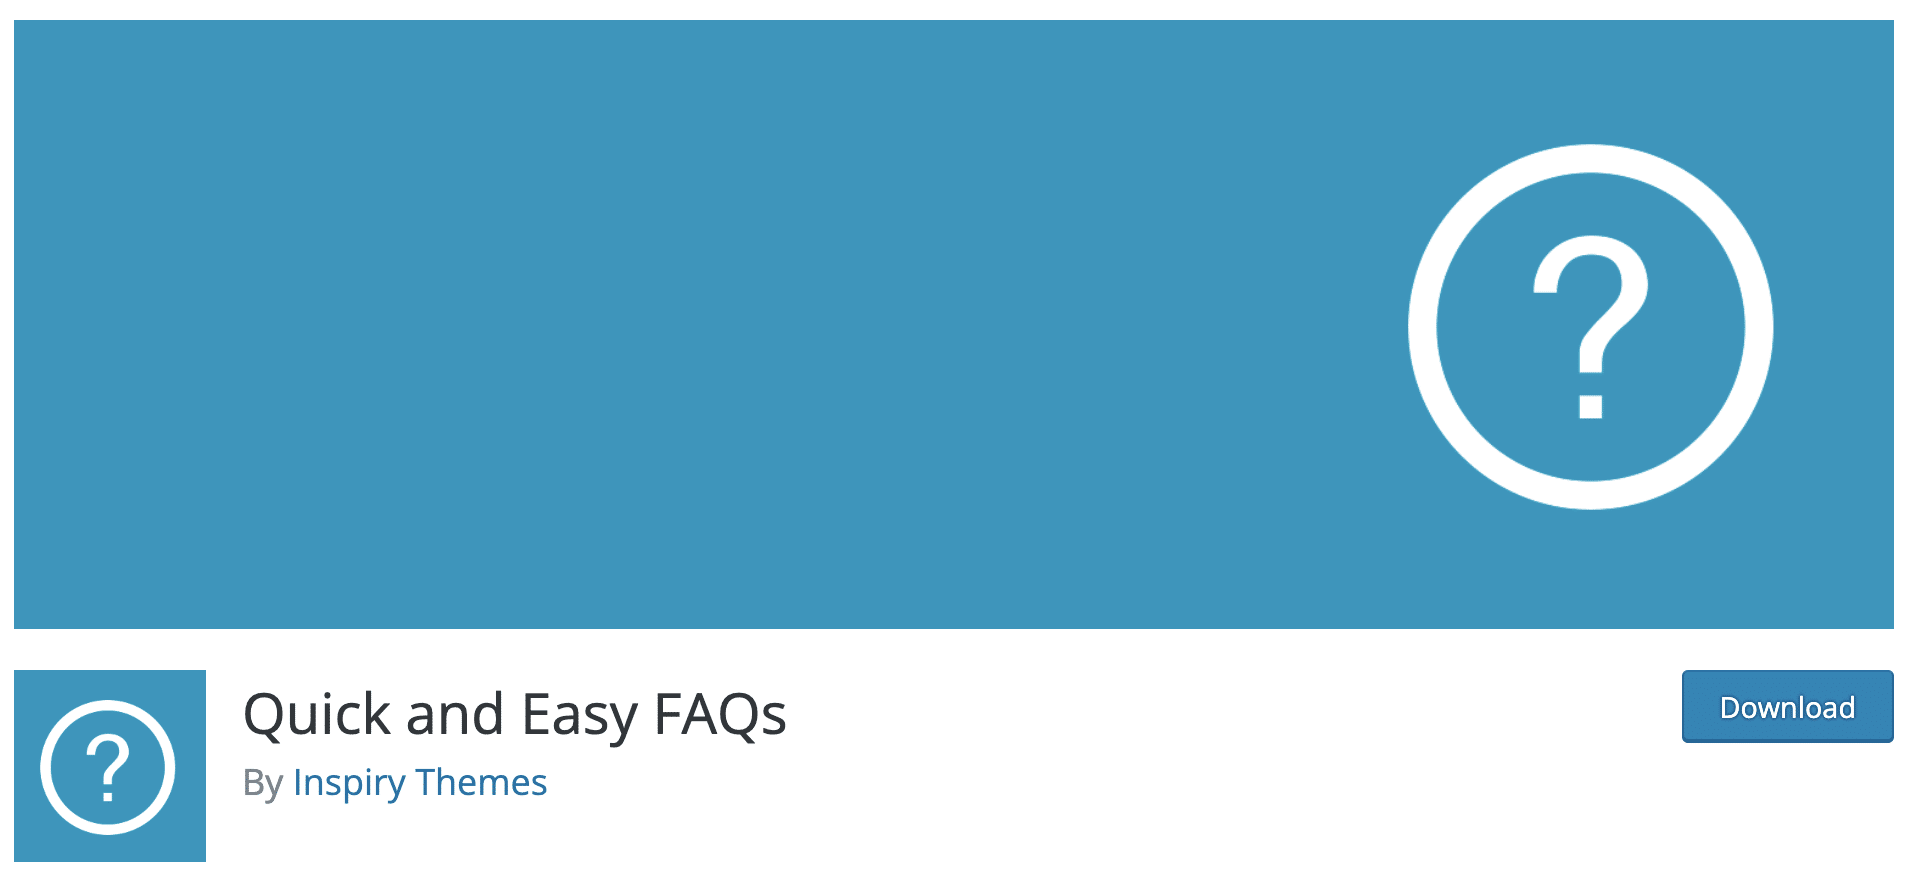 Quick and Easy FAQs WordPress plugin. 